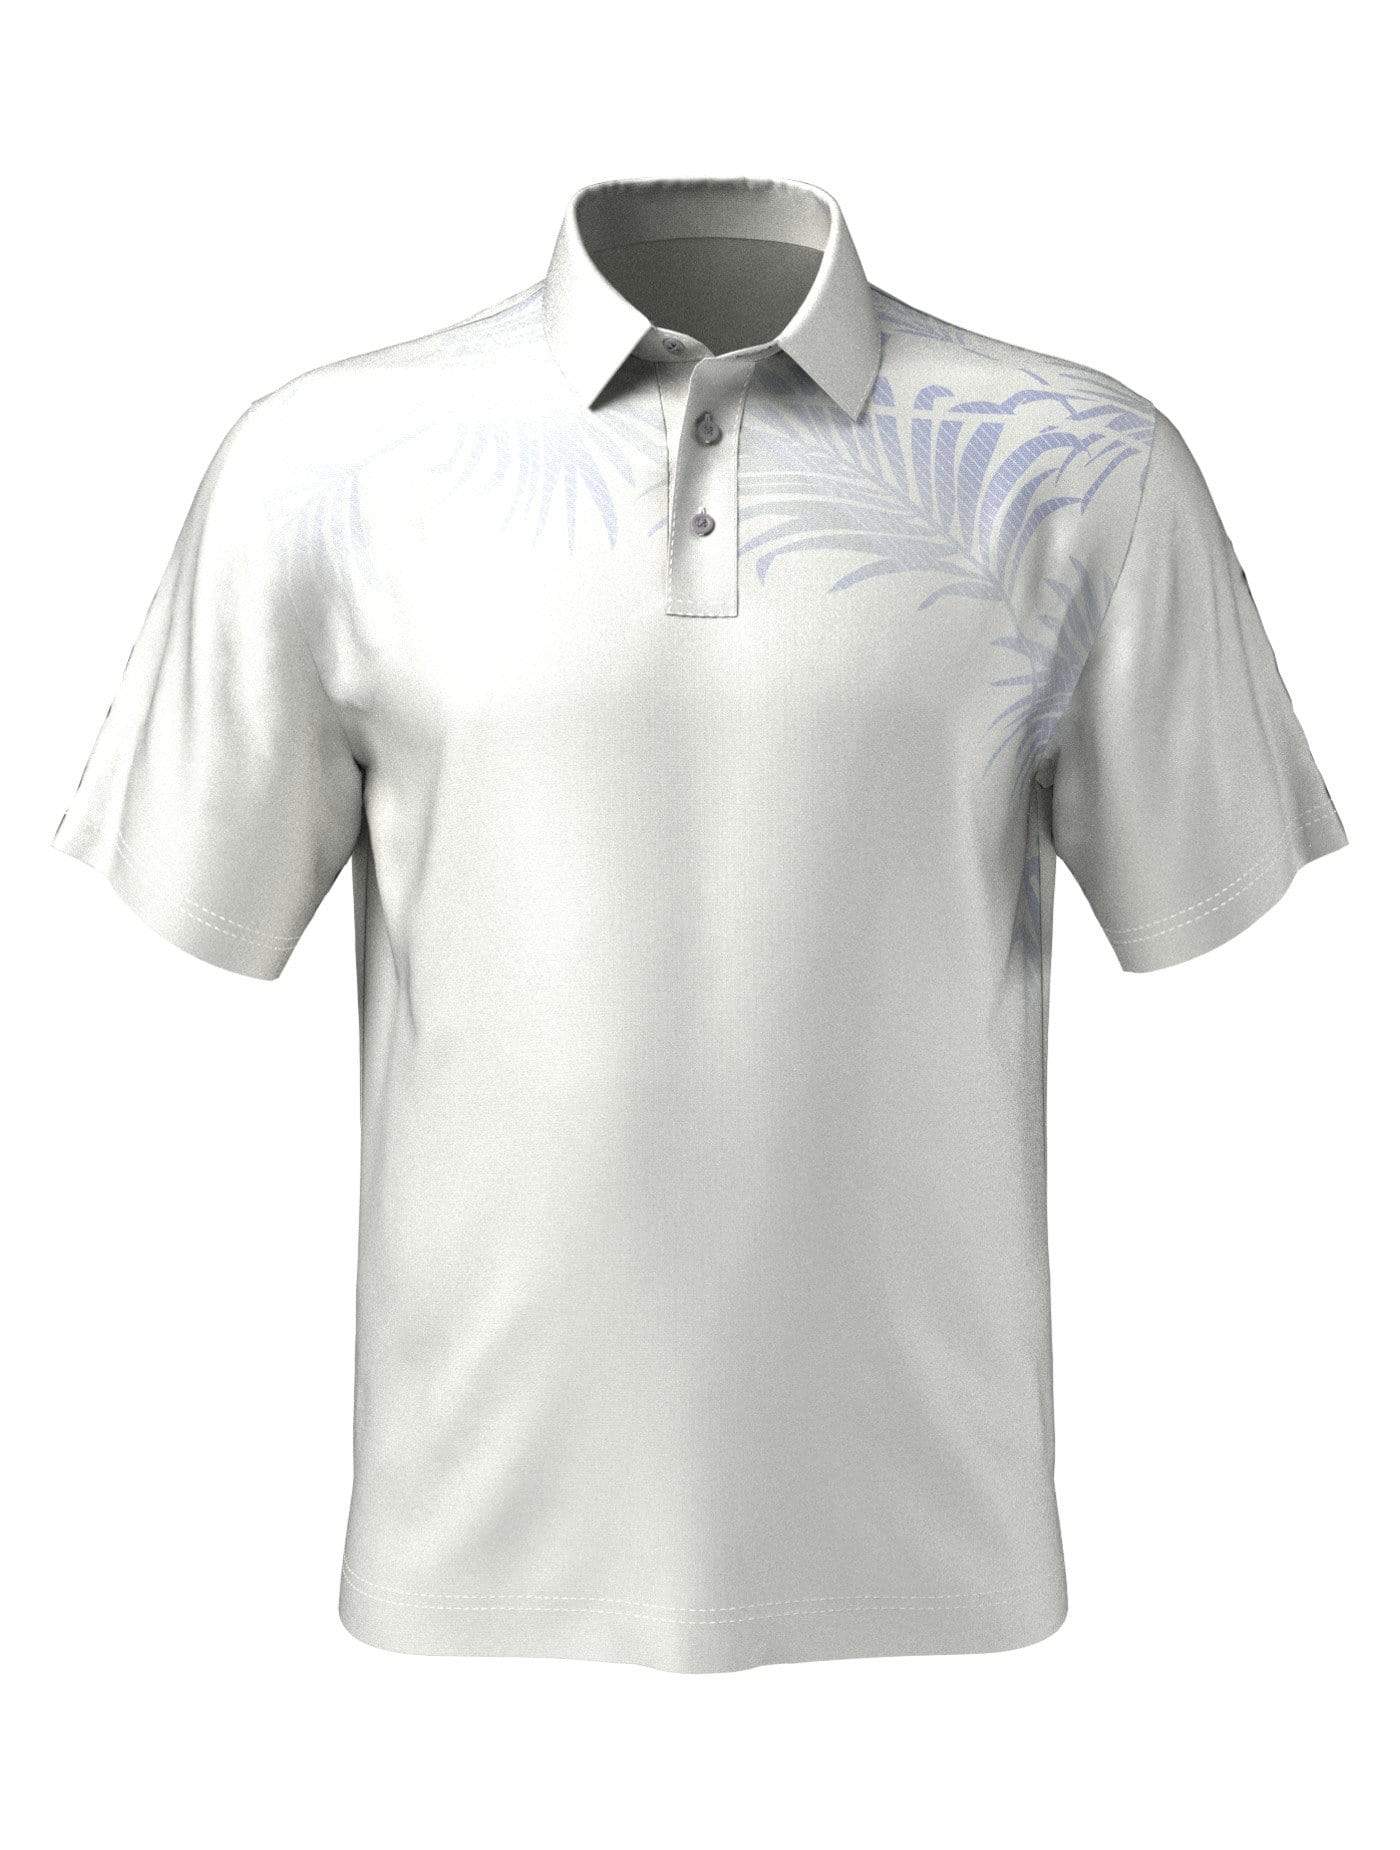 PGA TOUR Apparel Boys Asymmetrical Tropical Print Polo Shirt, Size Large, White, 100% Polyester | Golf Apparel Shop